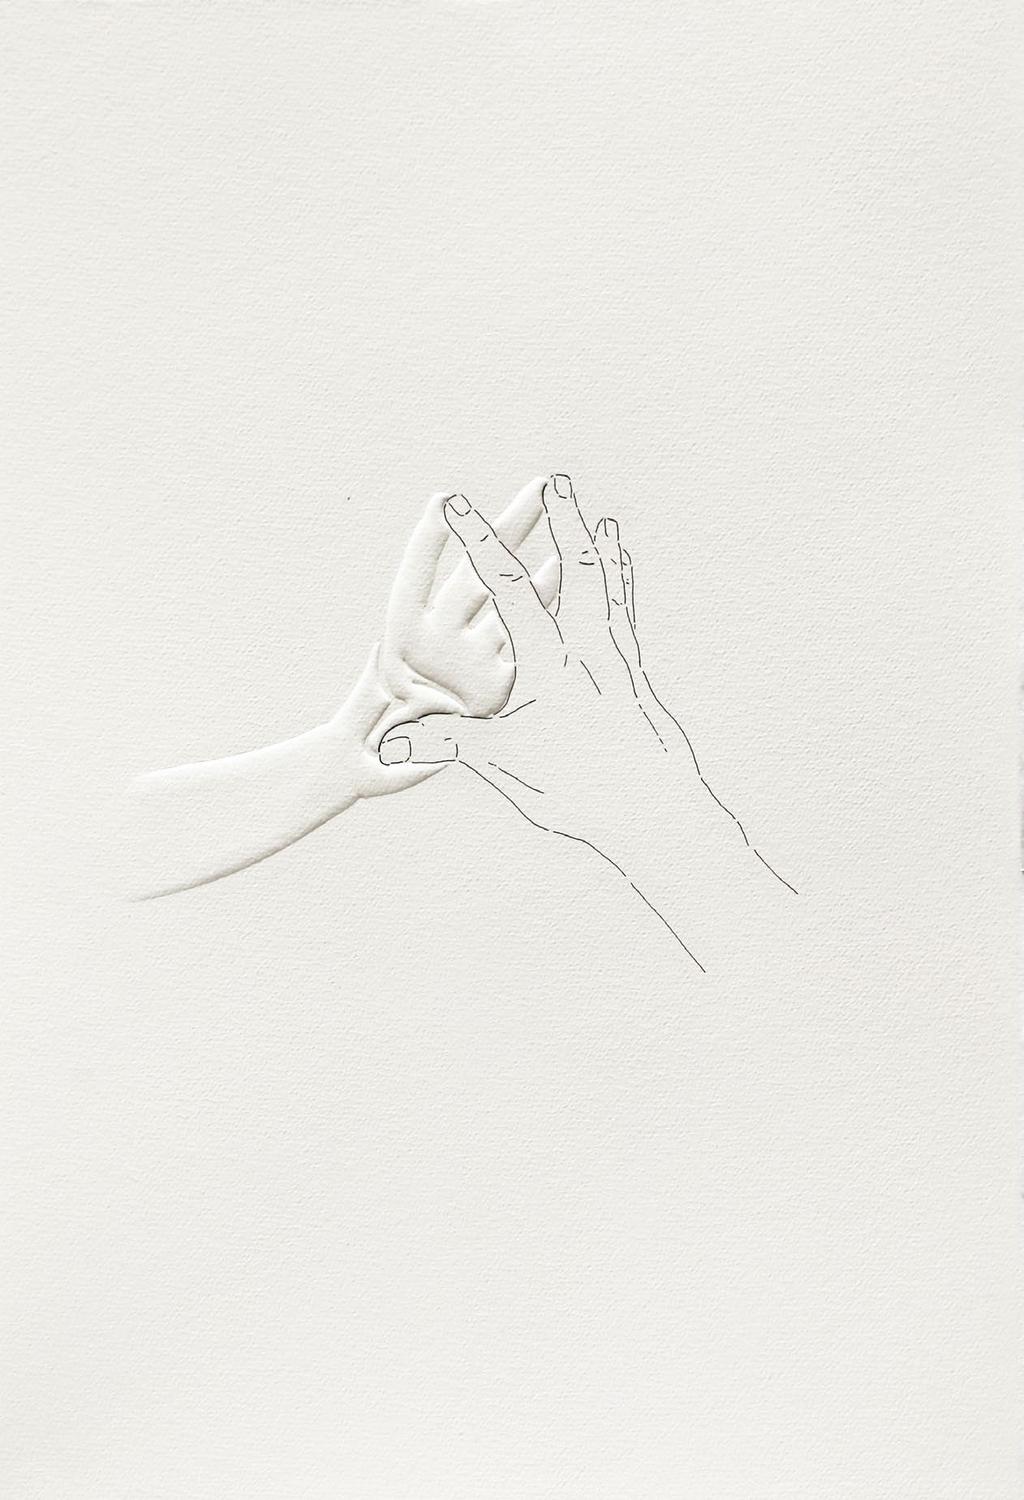 apipakótene (La otra mano) dibujo y gofrado a mano